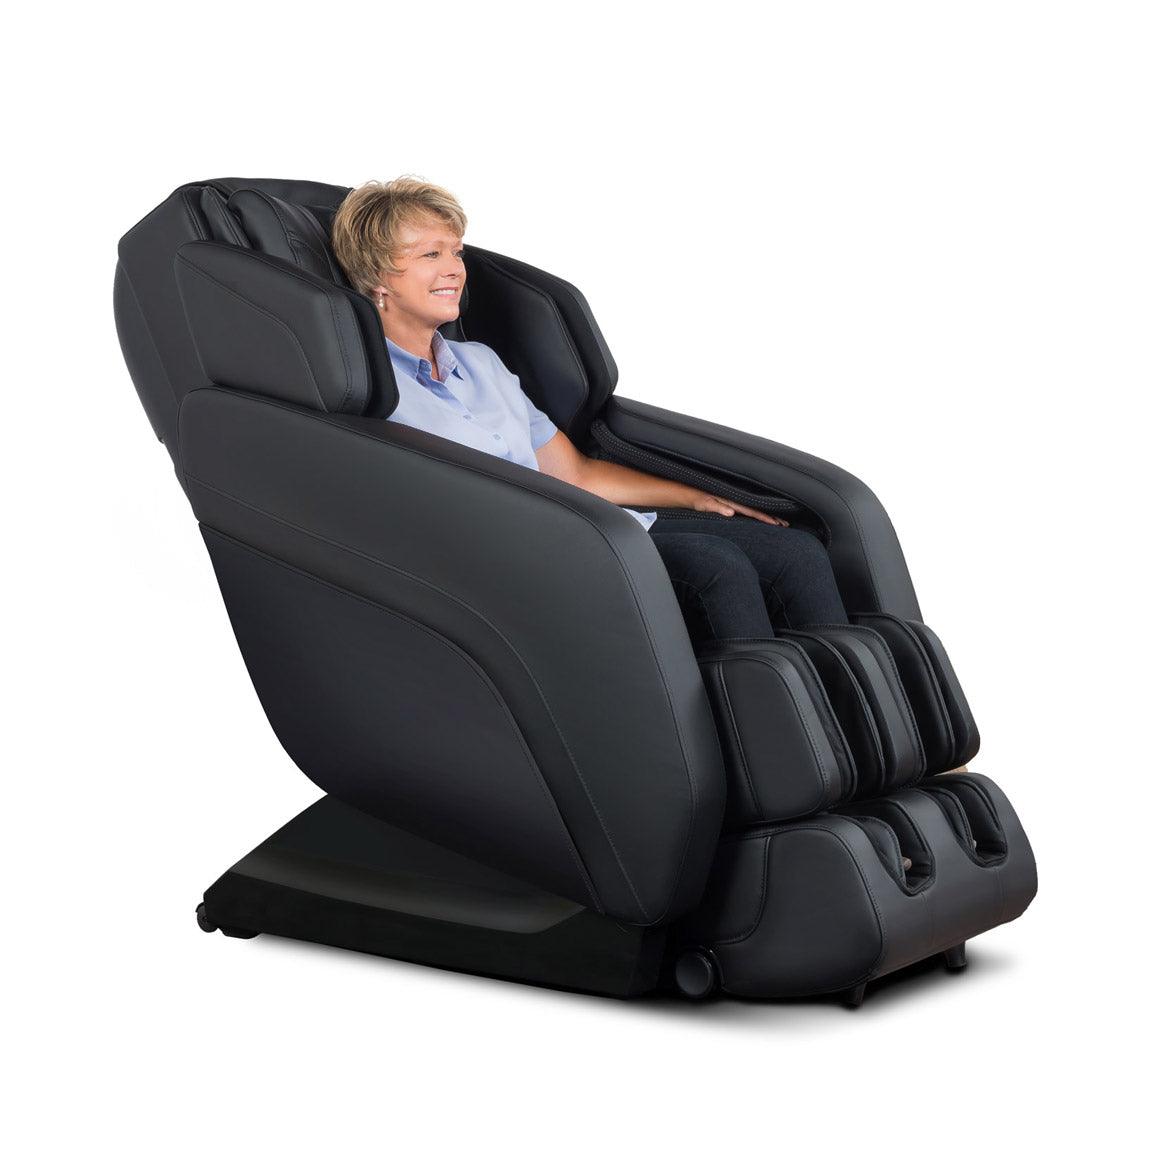 MK-V PLUS Full Body Massage Chair (Black) - sku-32113021321318 - Massage Chairs at zebramassagechairs.com